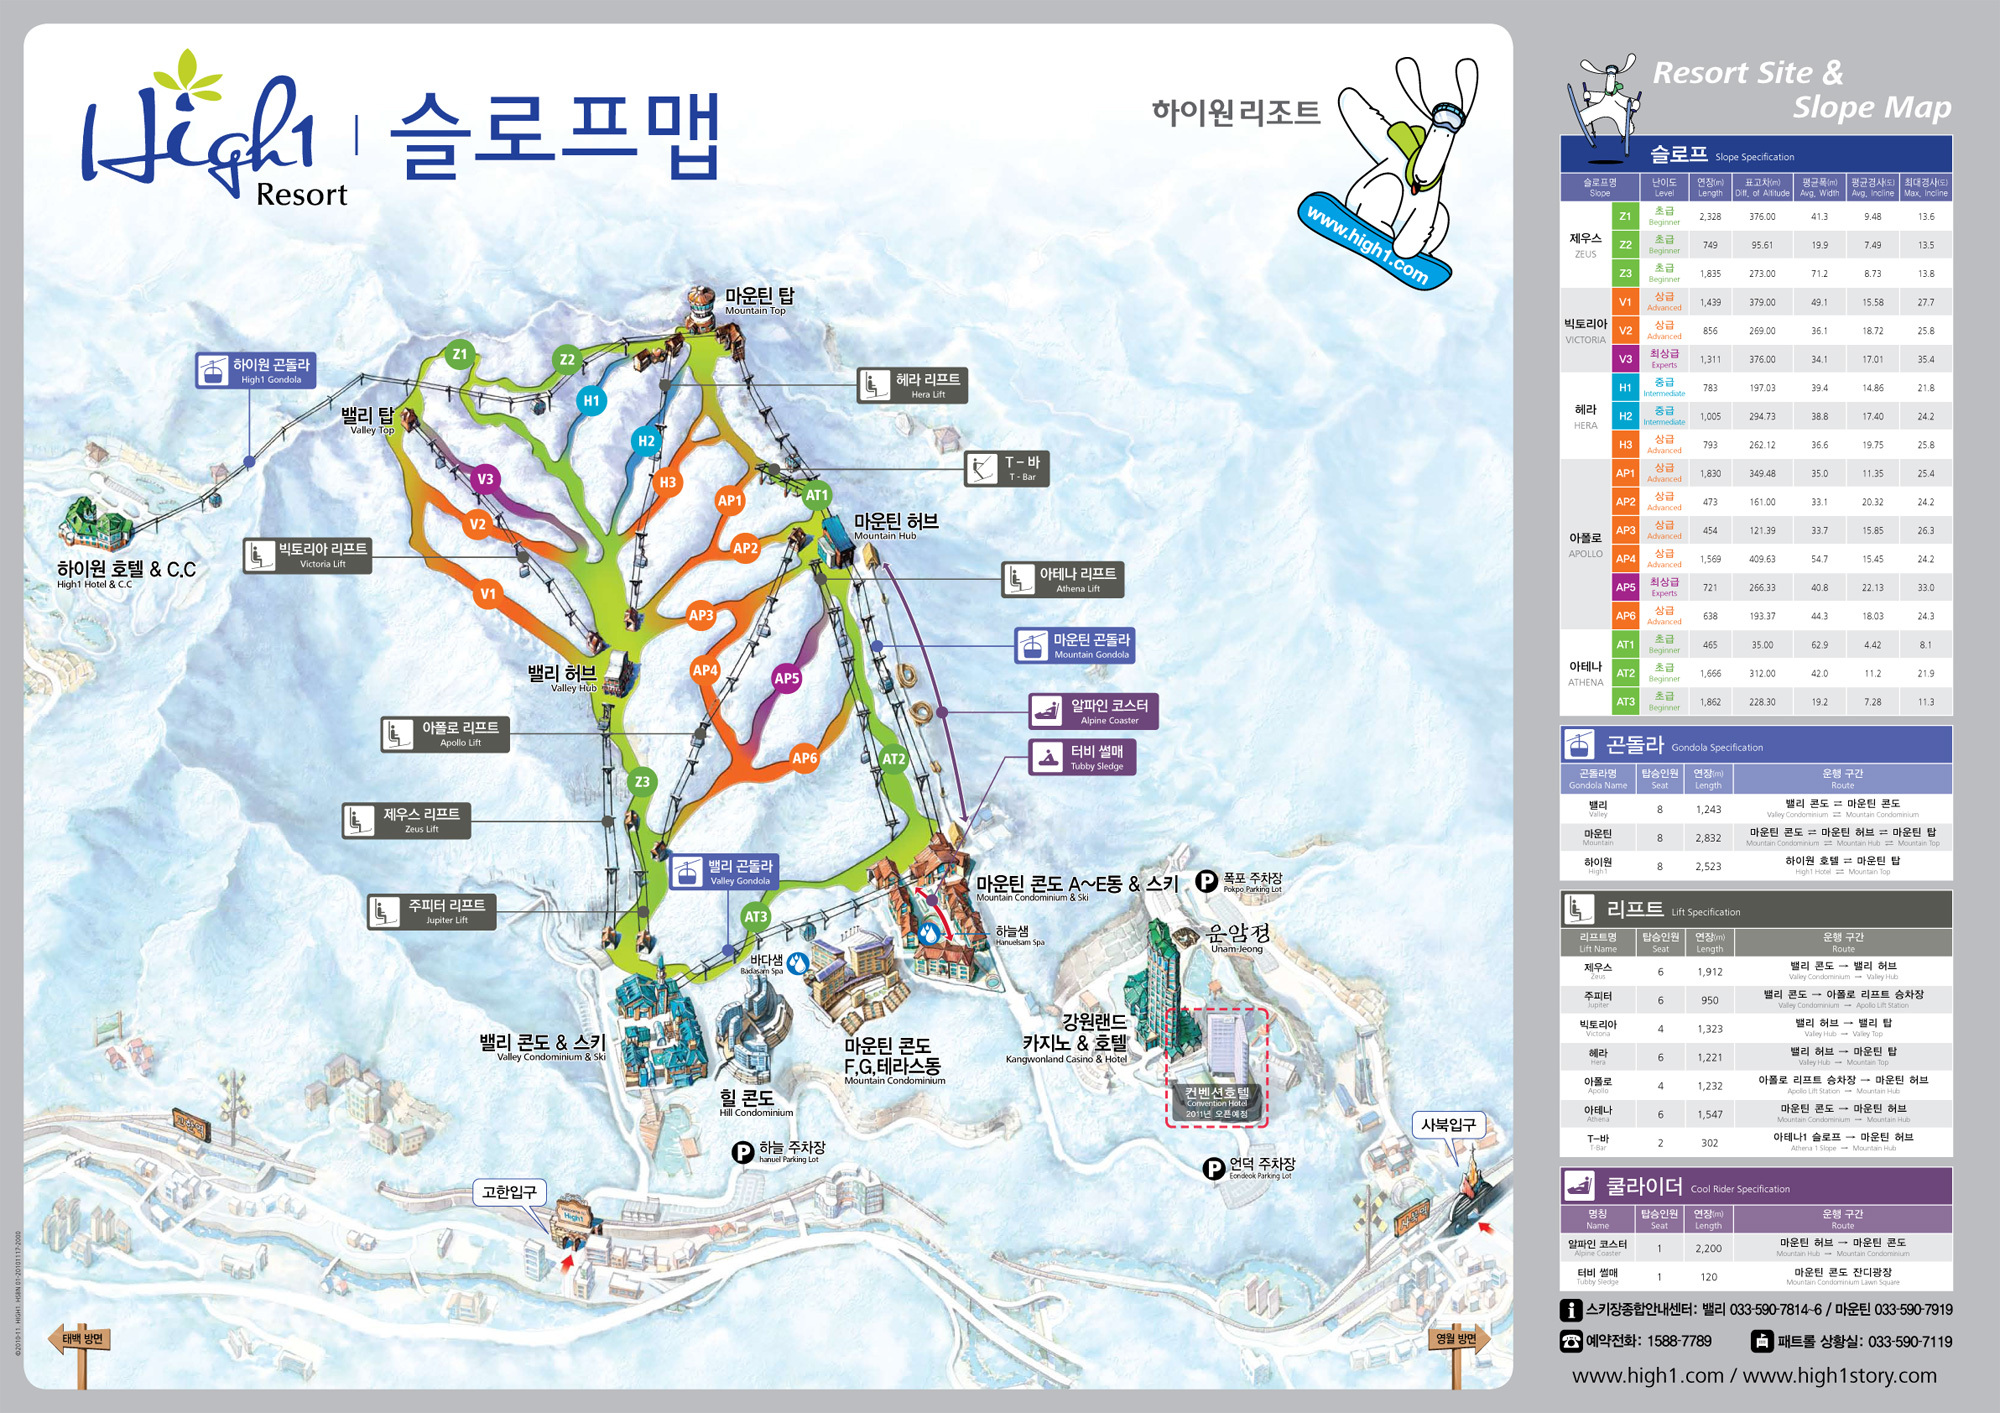 High1 Ski Resort Piste / Trail Map